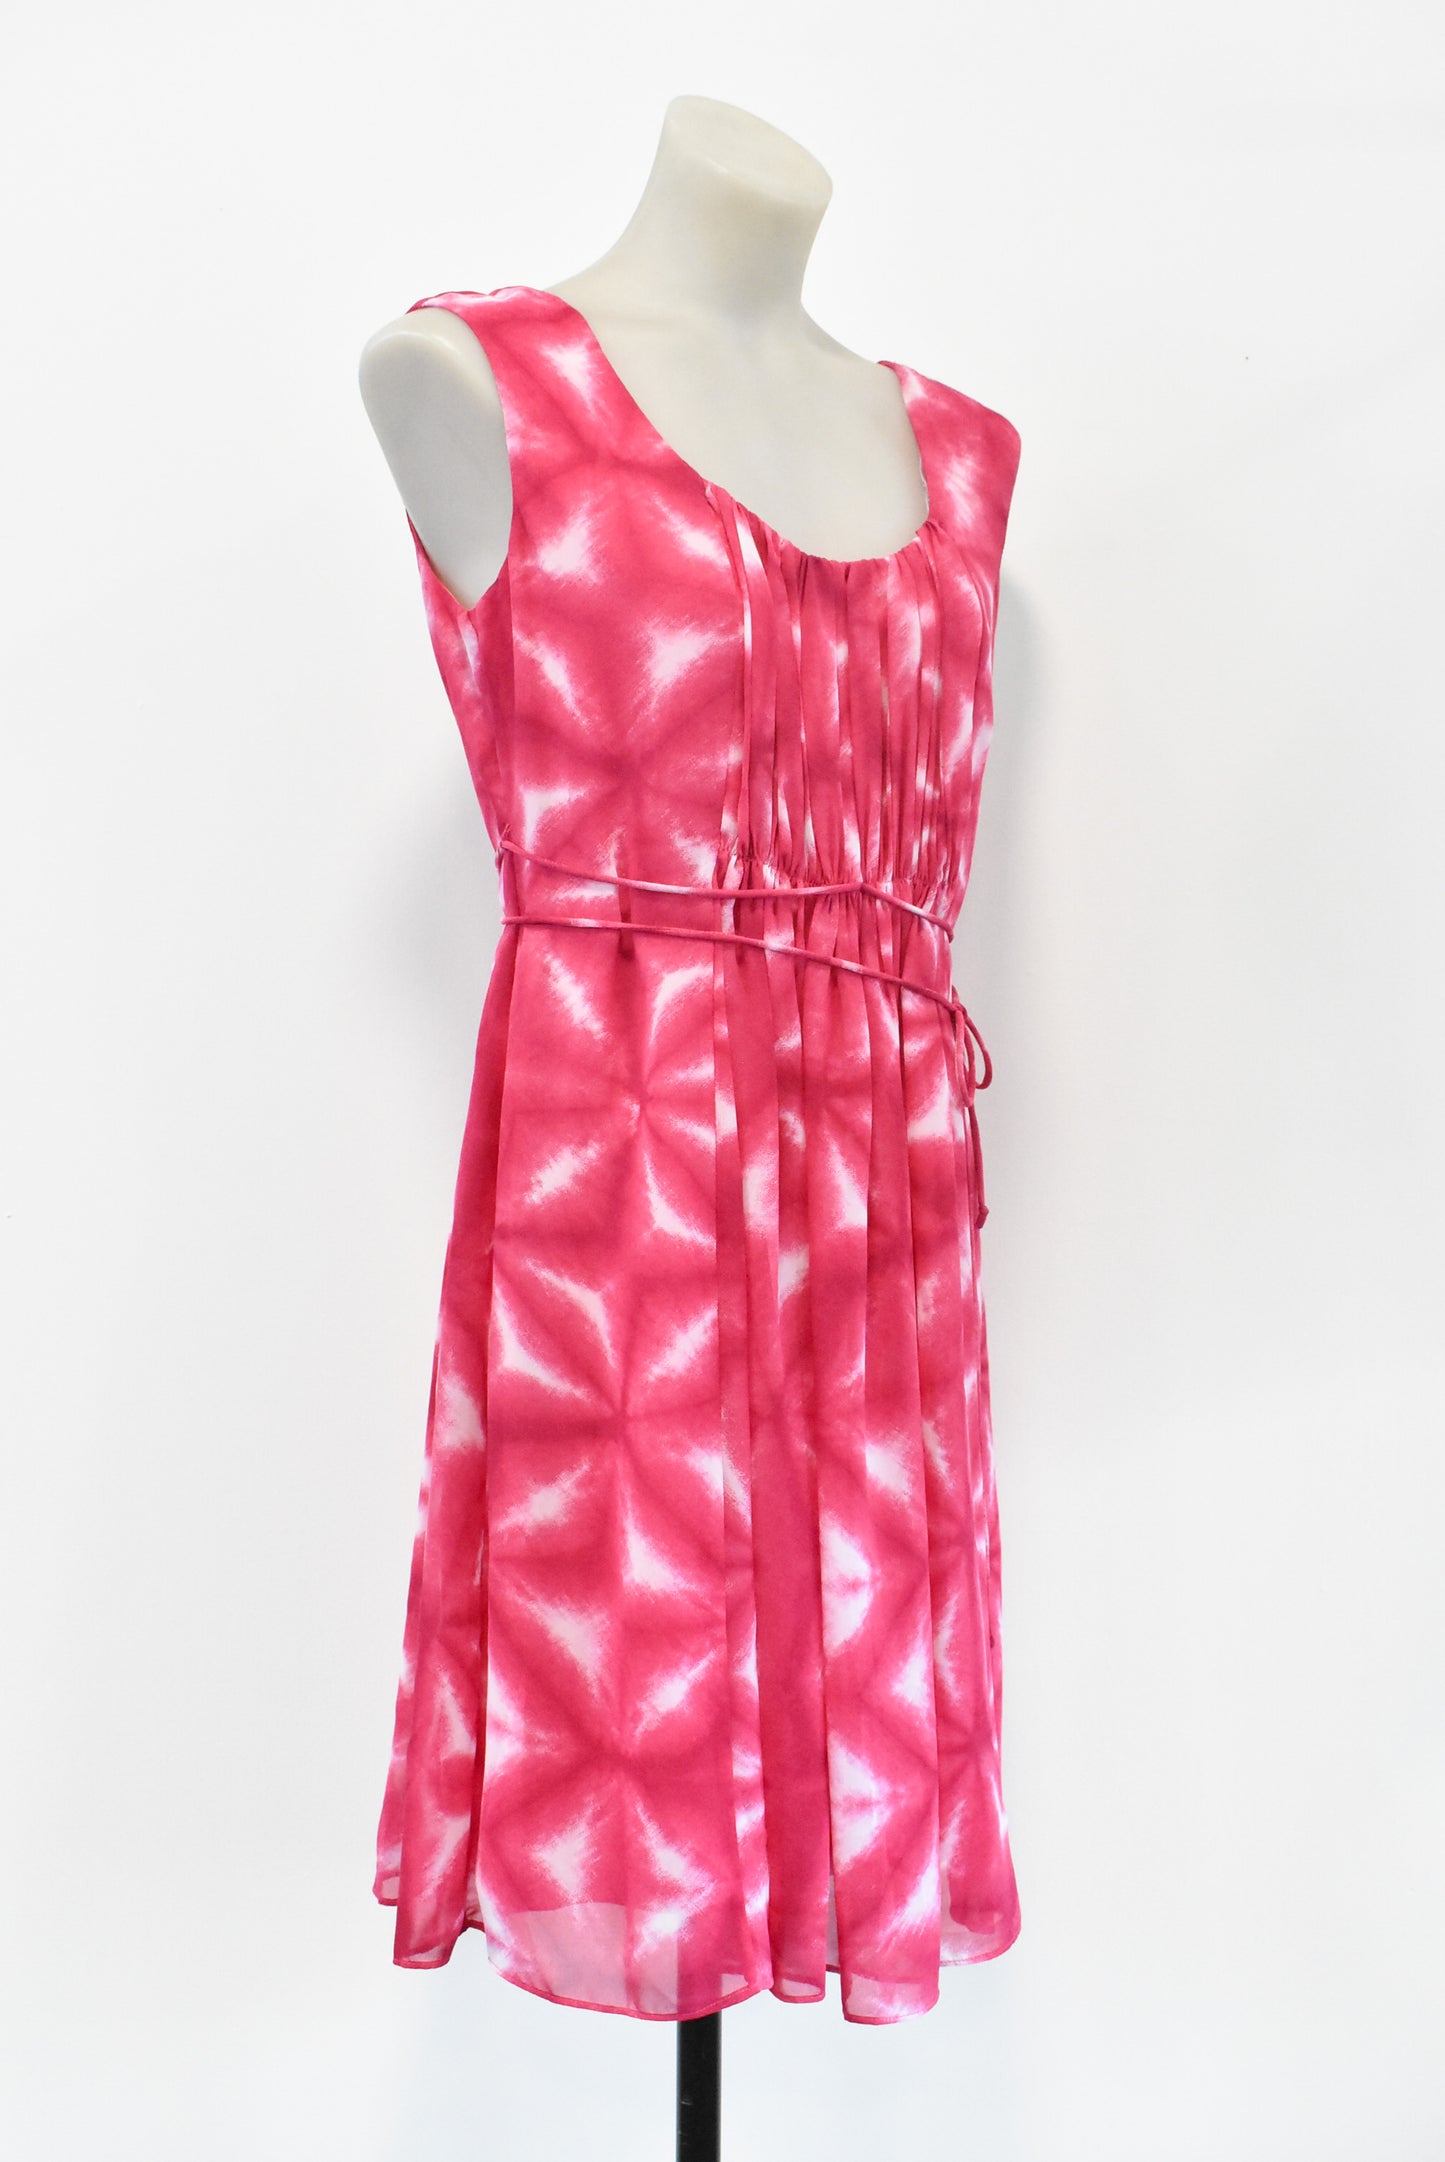 Calvin Klein, gathered A-line dress, 12 (NWT)